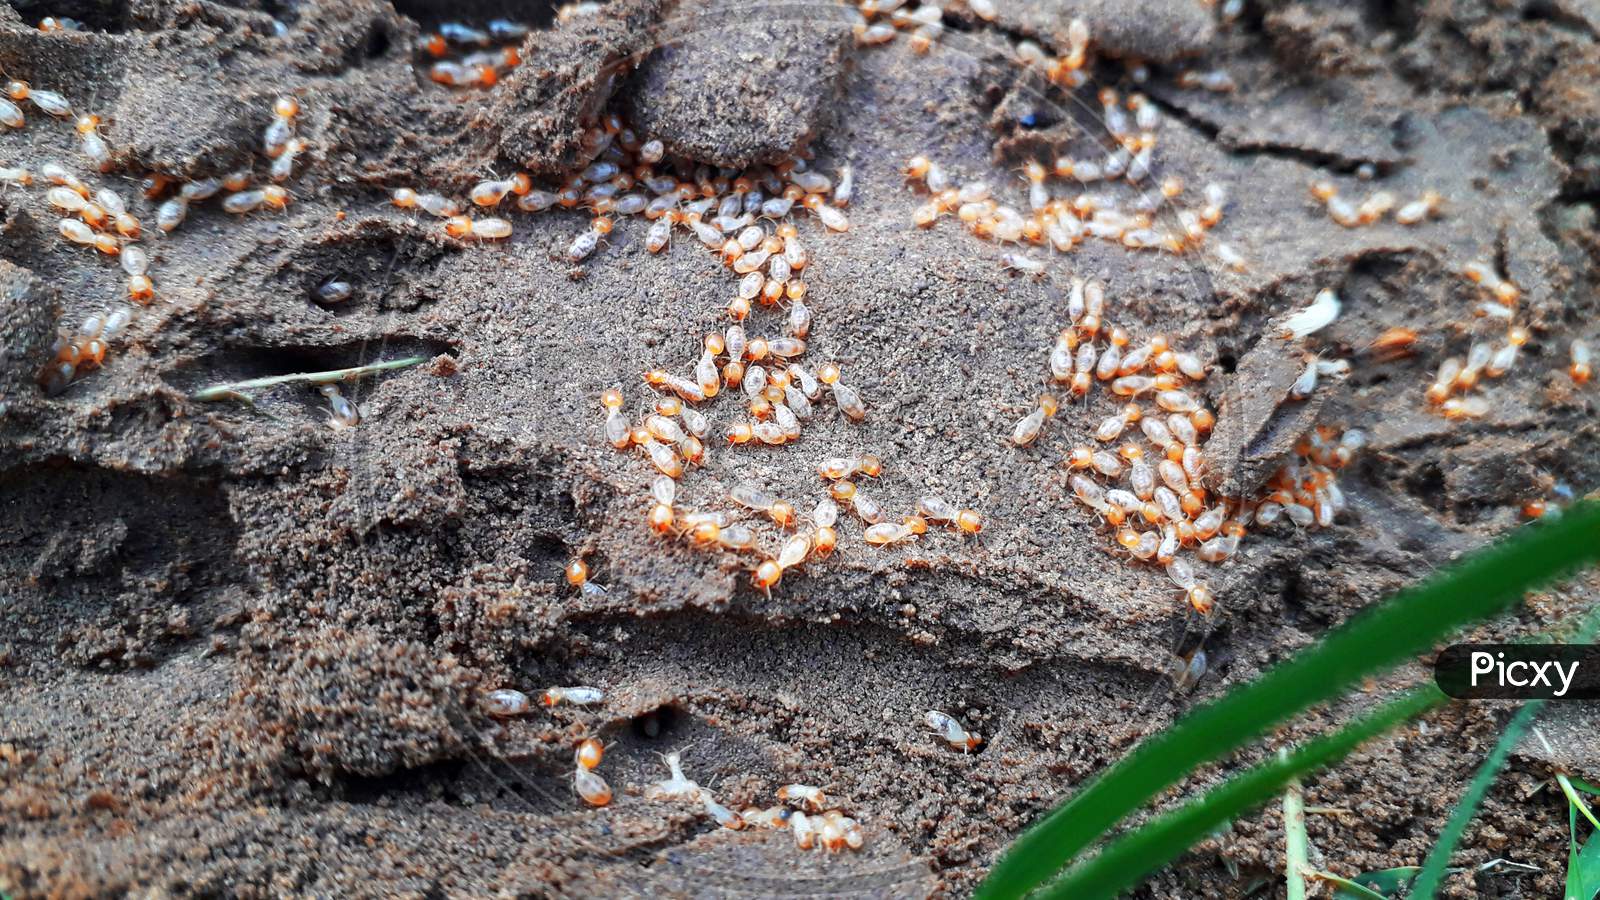 Termites or white ants nest